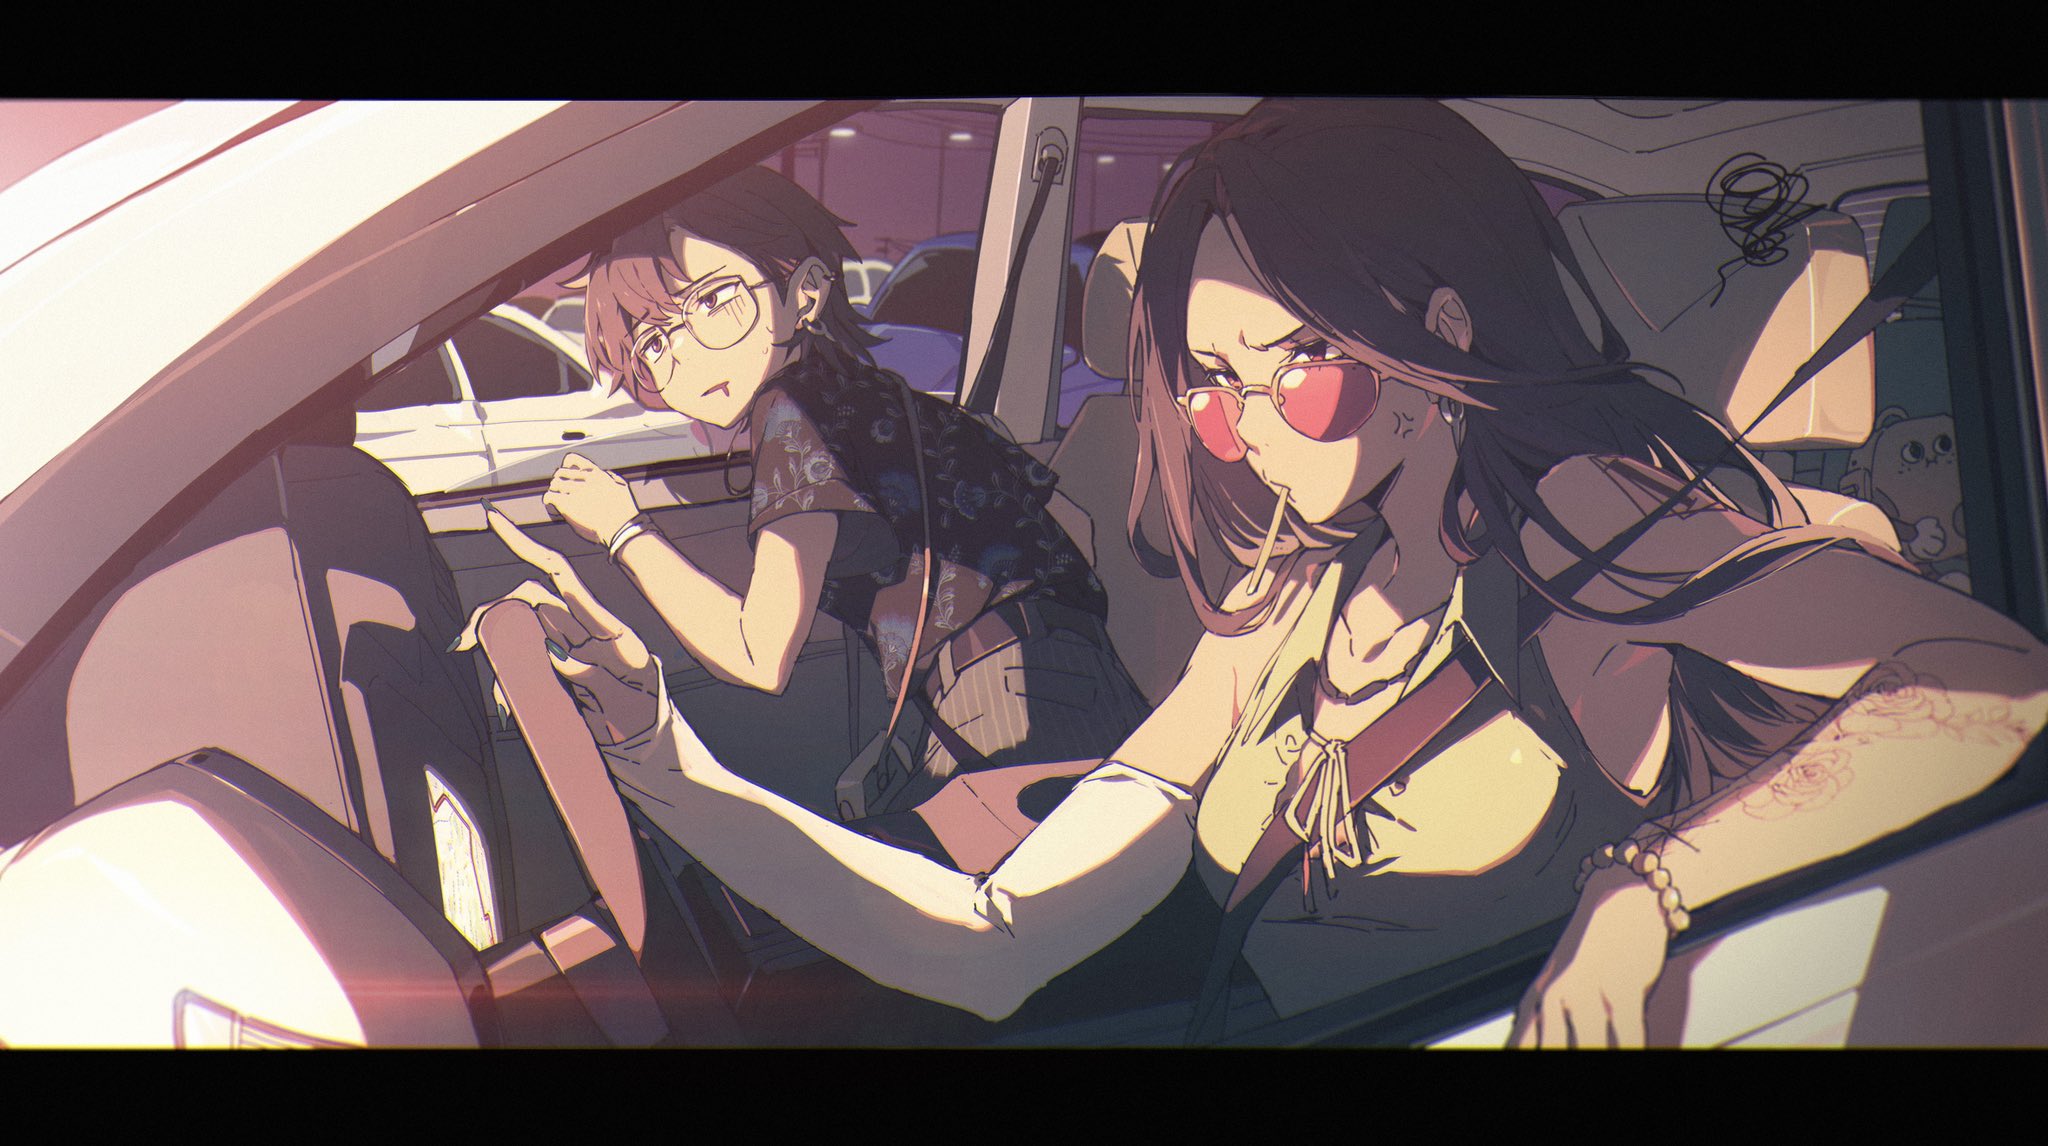 Anime 2048x1146 anime girls car sunglasses angry two women sunlight earring